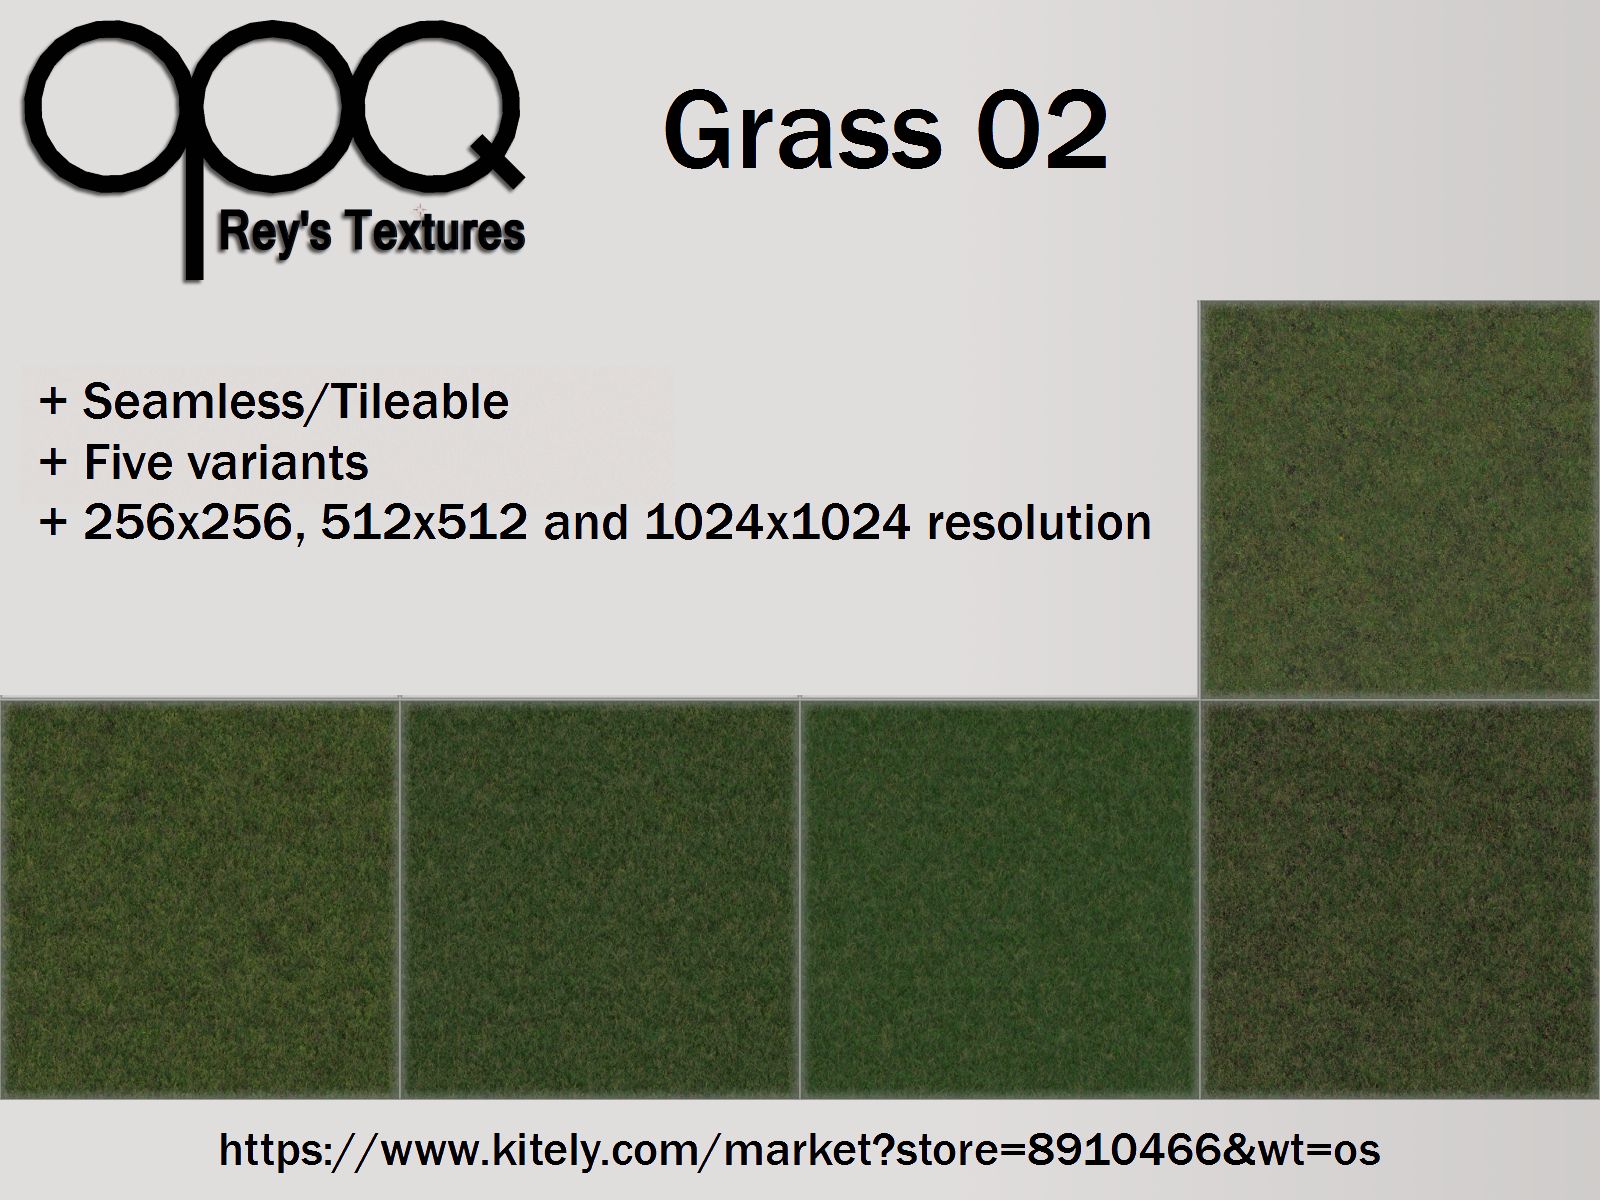 Rey's Grass 02 Poster Kitely.jpg